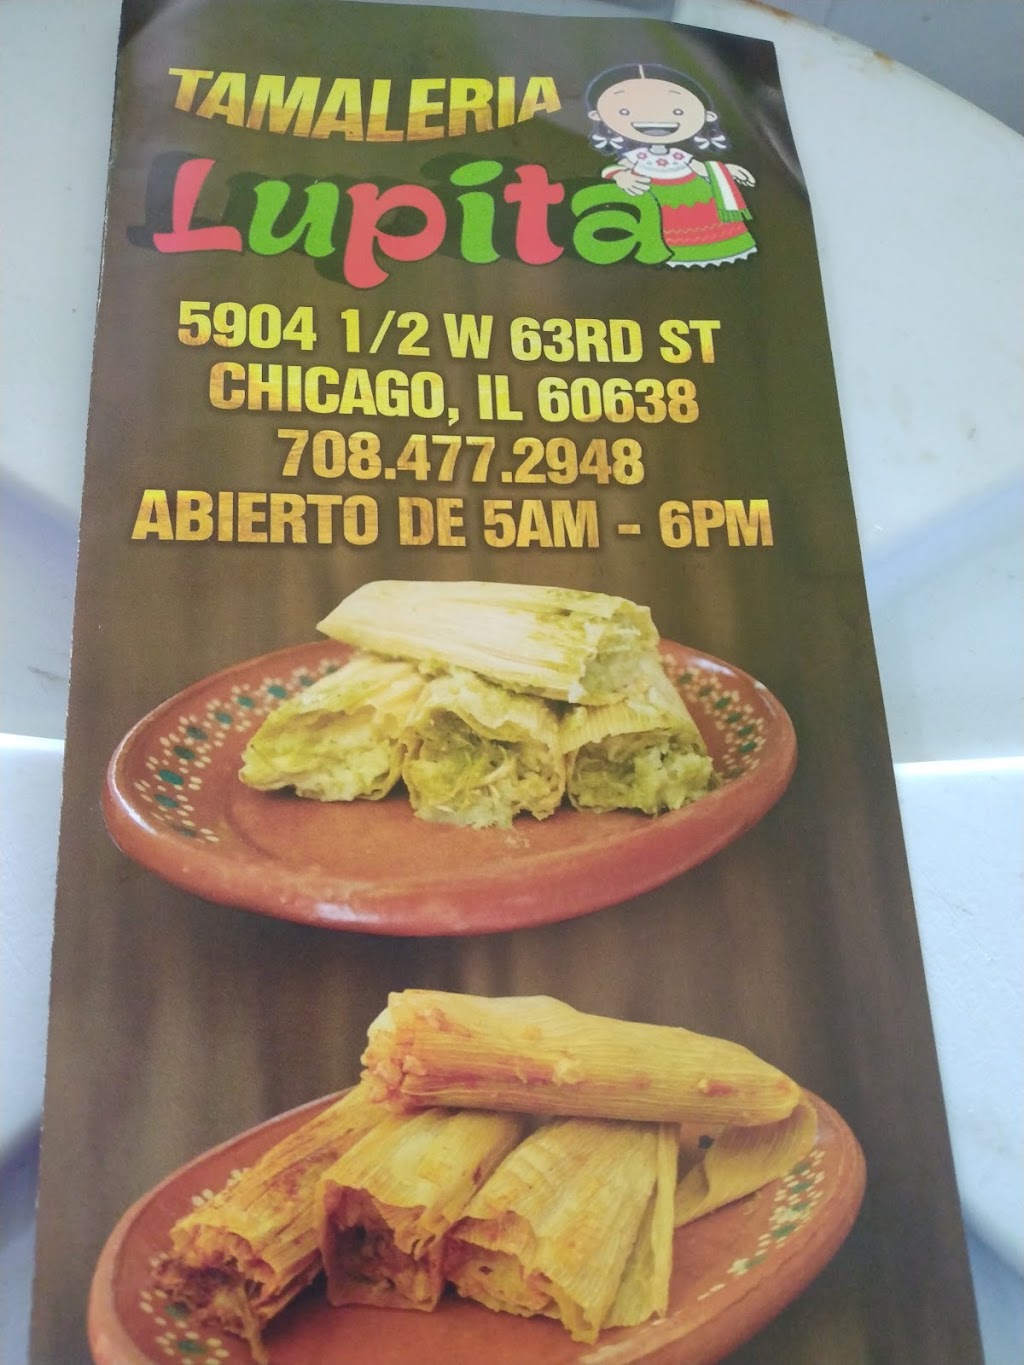 Lupita tamaleria | restaurant | 5904 1/2 W 63rd St, Chicago, IL 60638, USA | 7084772948 OR +1 708-477-2948